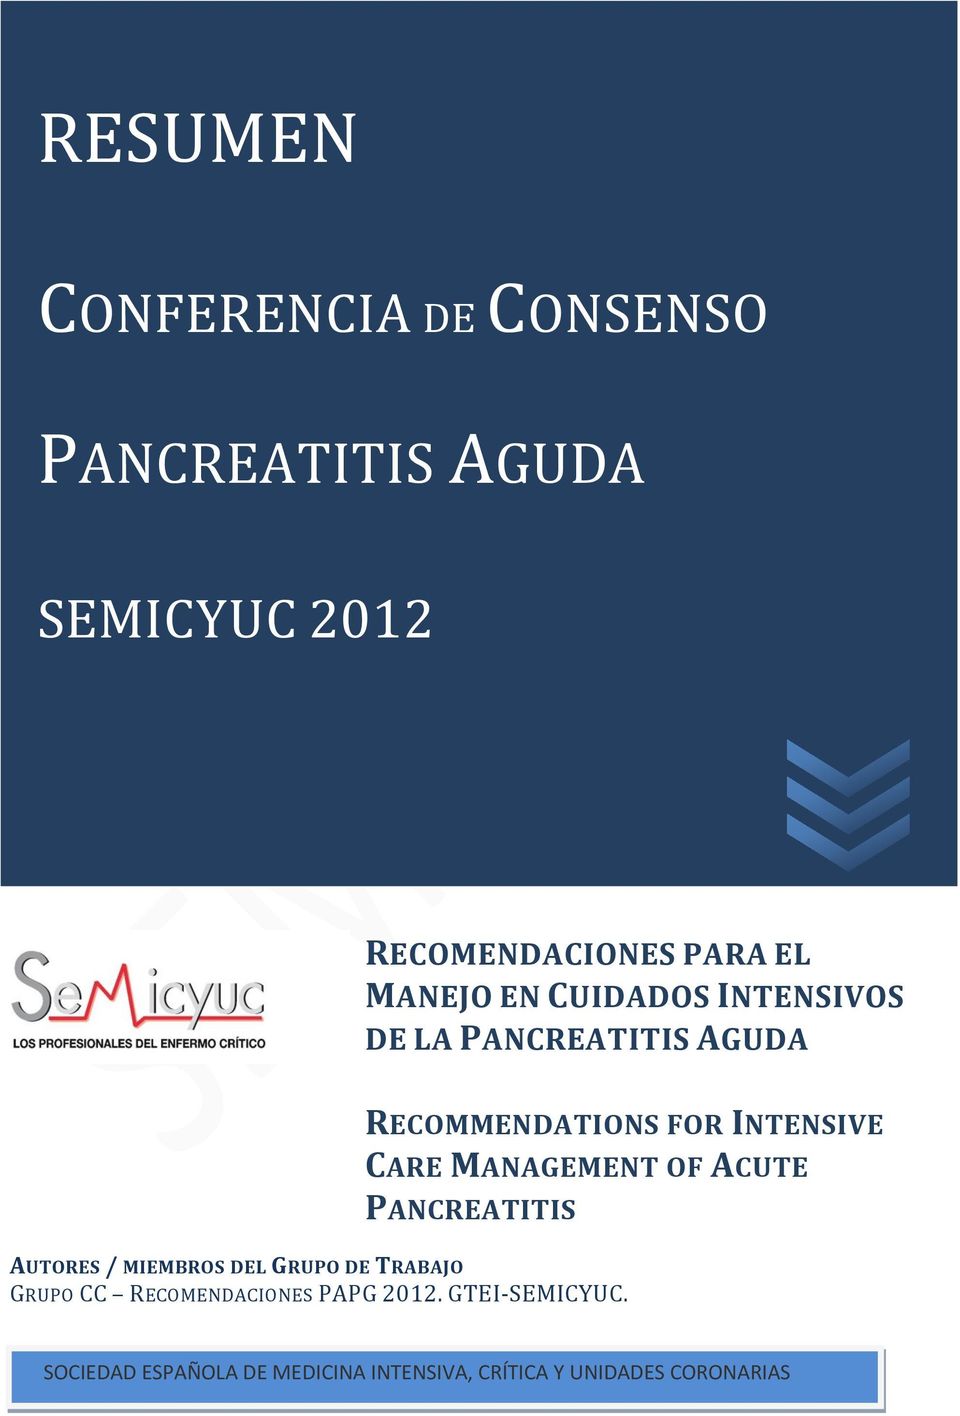 MANAGEMENT OF ACUTE PANCREATITIS AUTORES / MIEMBROS DEL GRUPO DE TRABAJO GRUPO CC